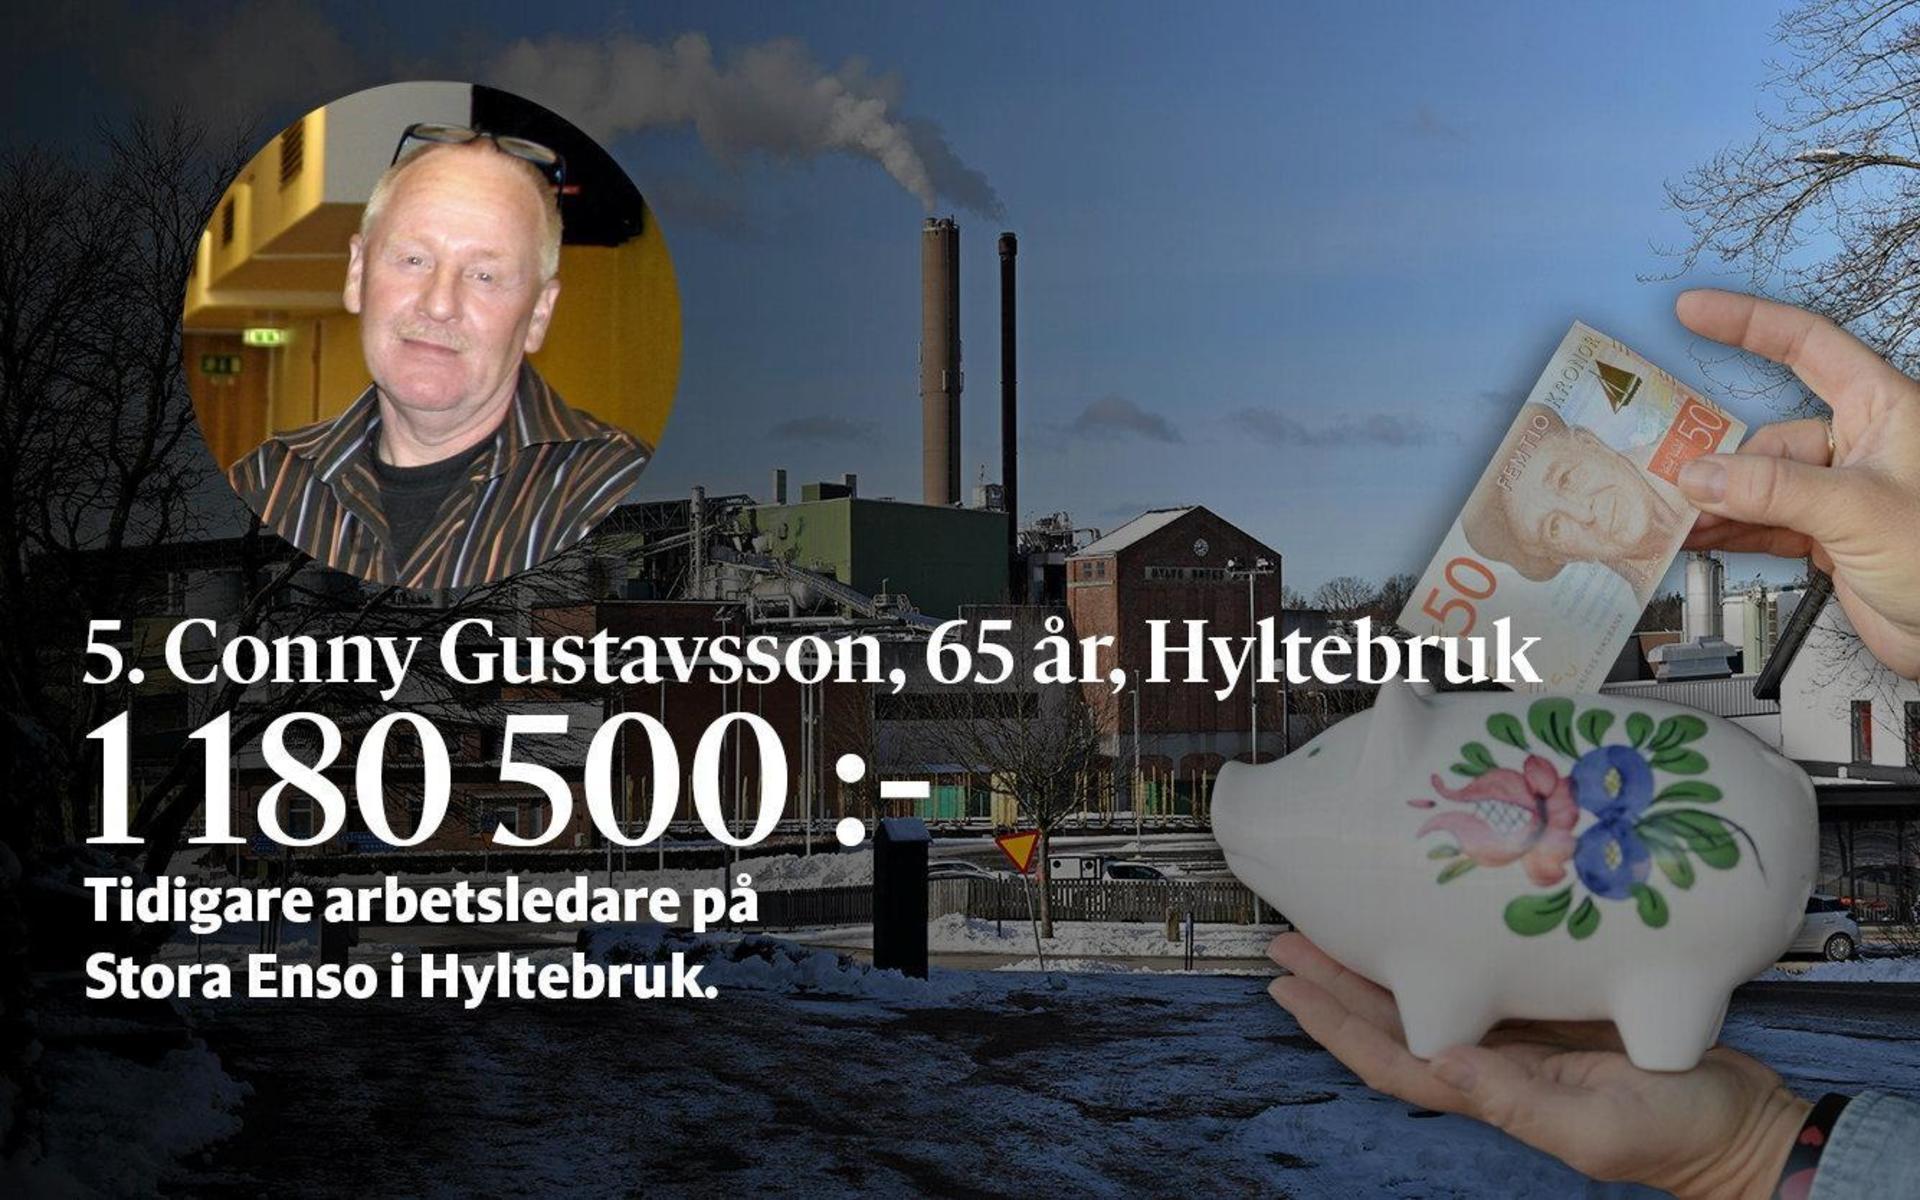 5. Conny Gustavsson jobbade tidigare som arbetsledare på Stora Enso i Hyltebruk.